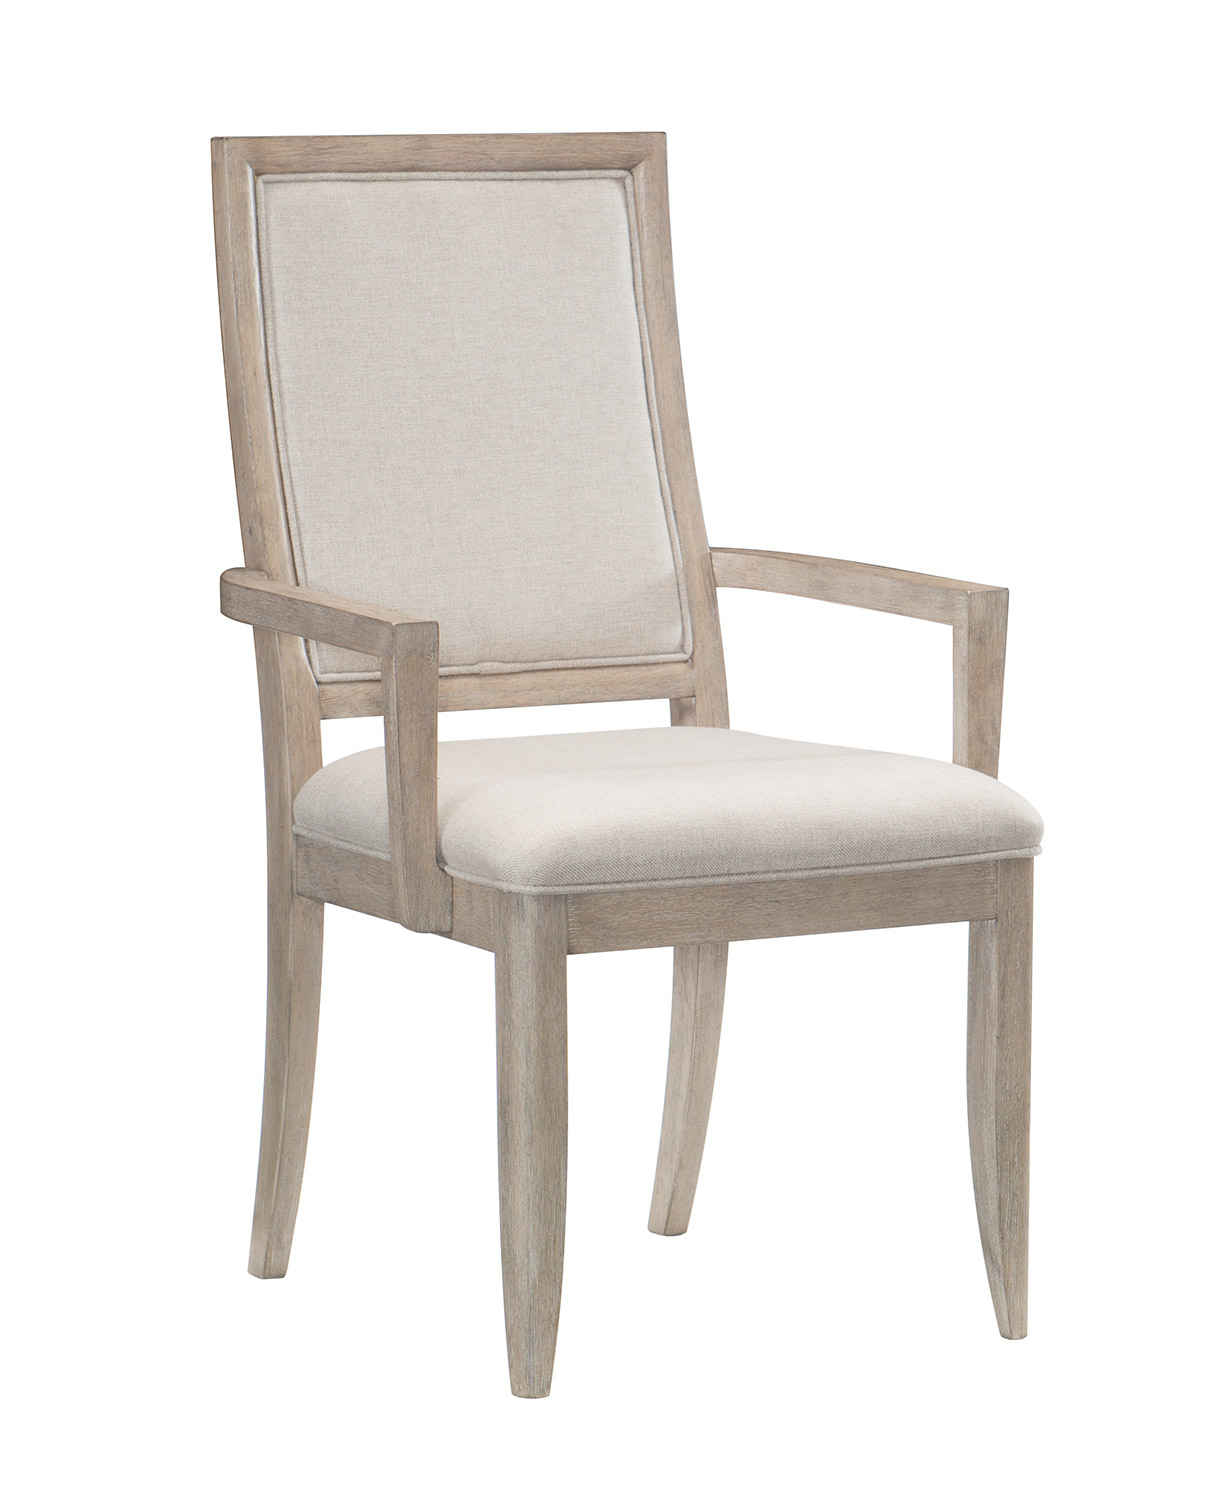 Homelegance McKewen Arm Chair - Light Gray